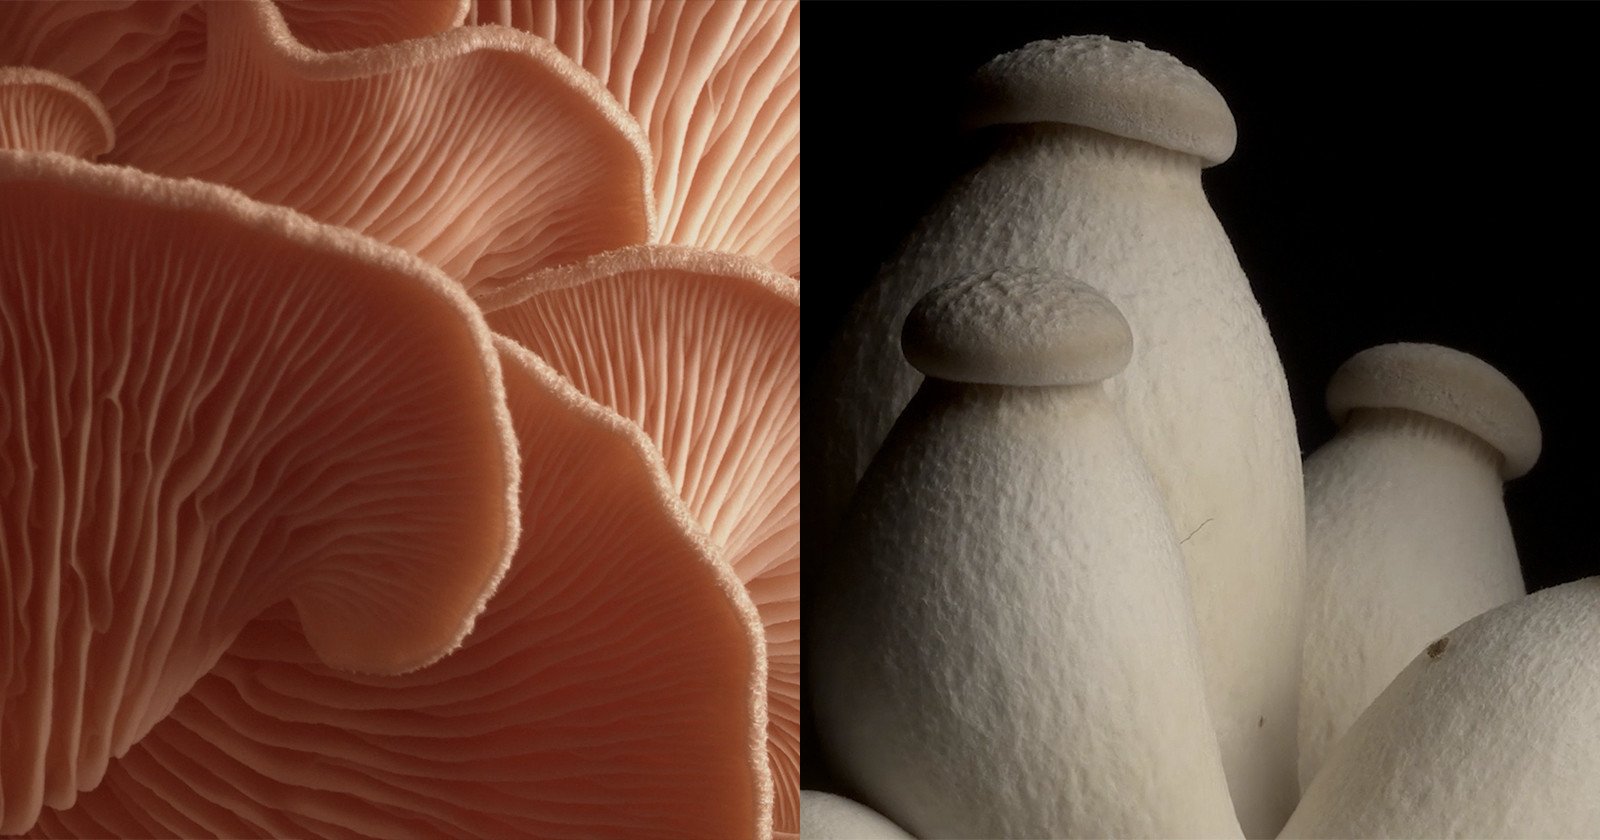  photographer spends year timelapsing growth mushrooms 